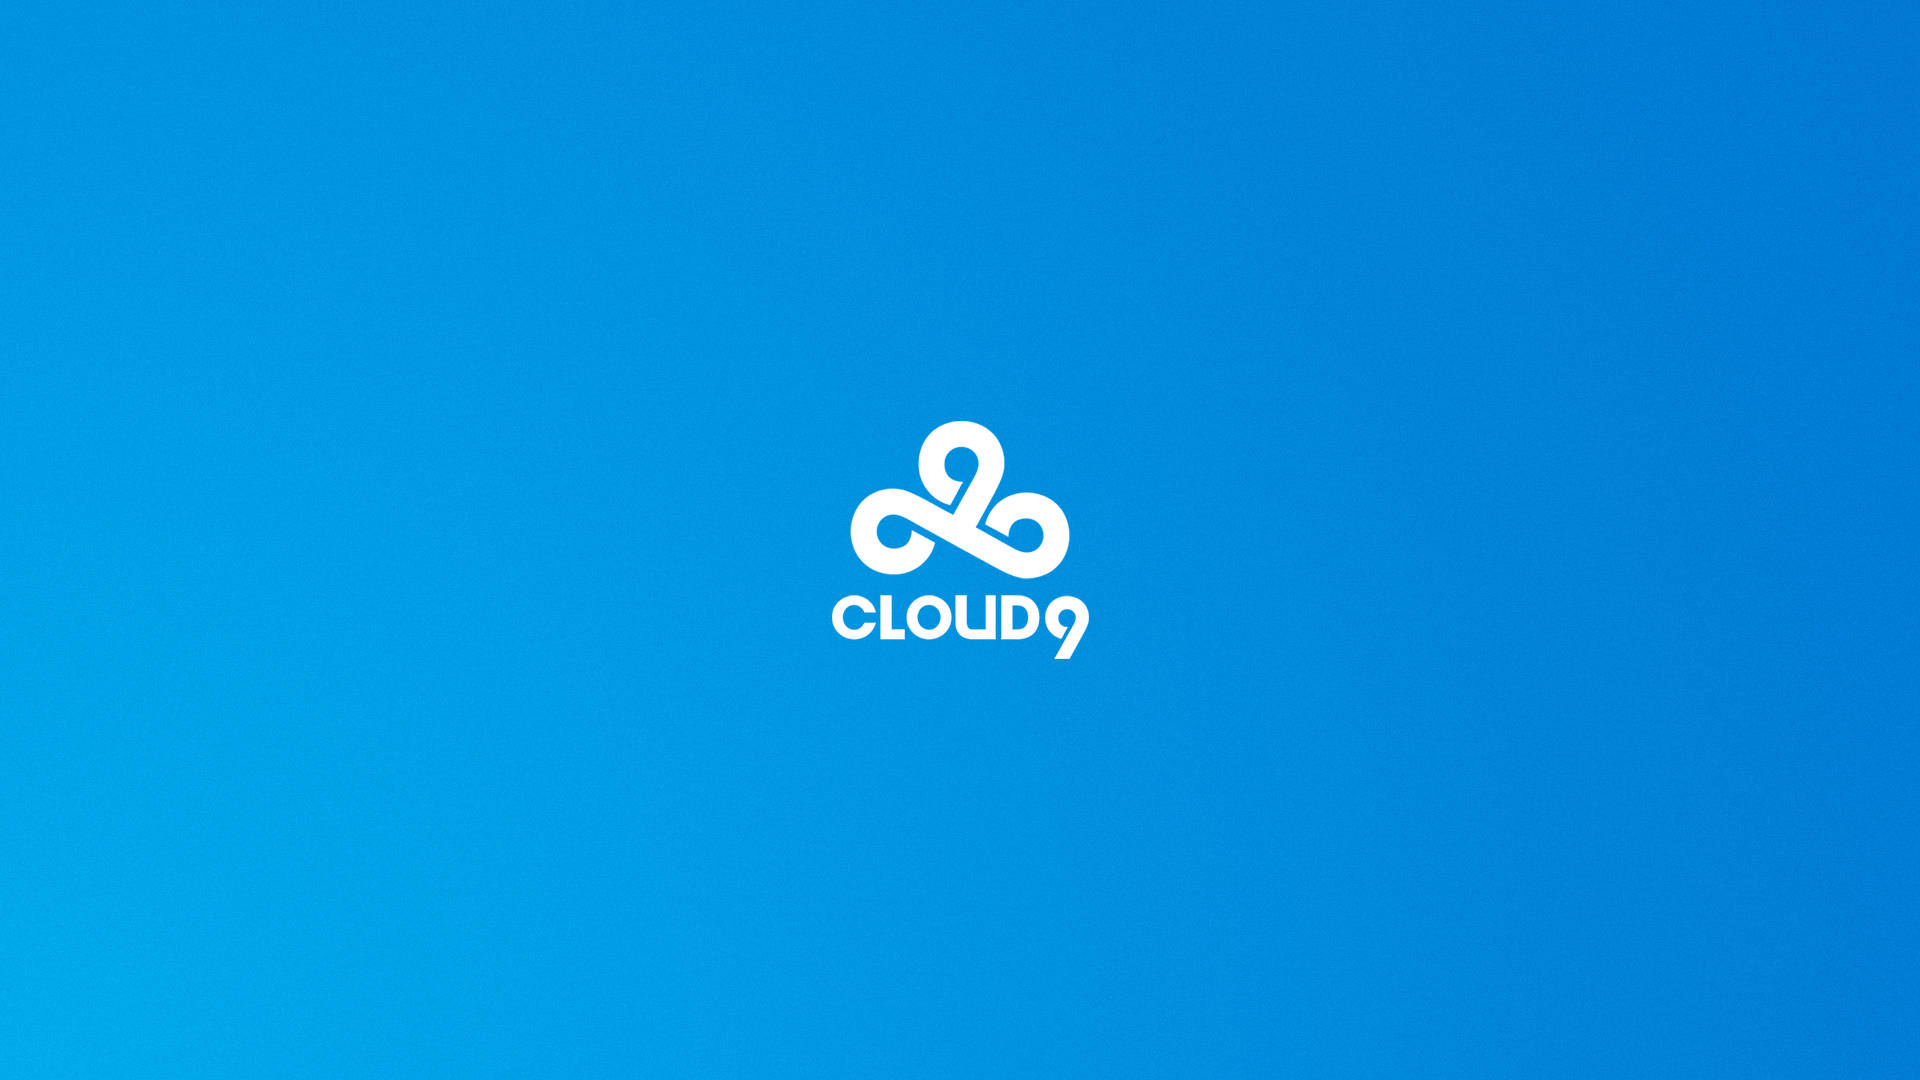 Cloud9 Minimalistic Logo In White Background